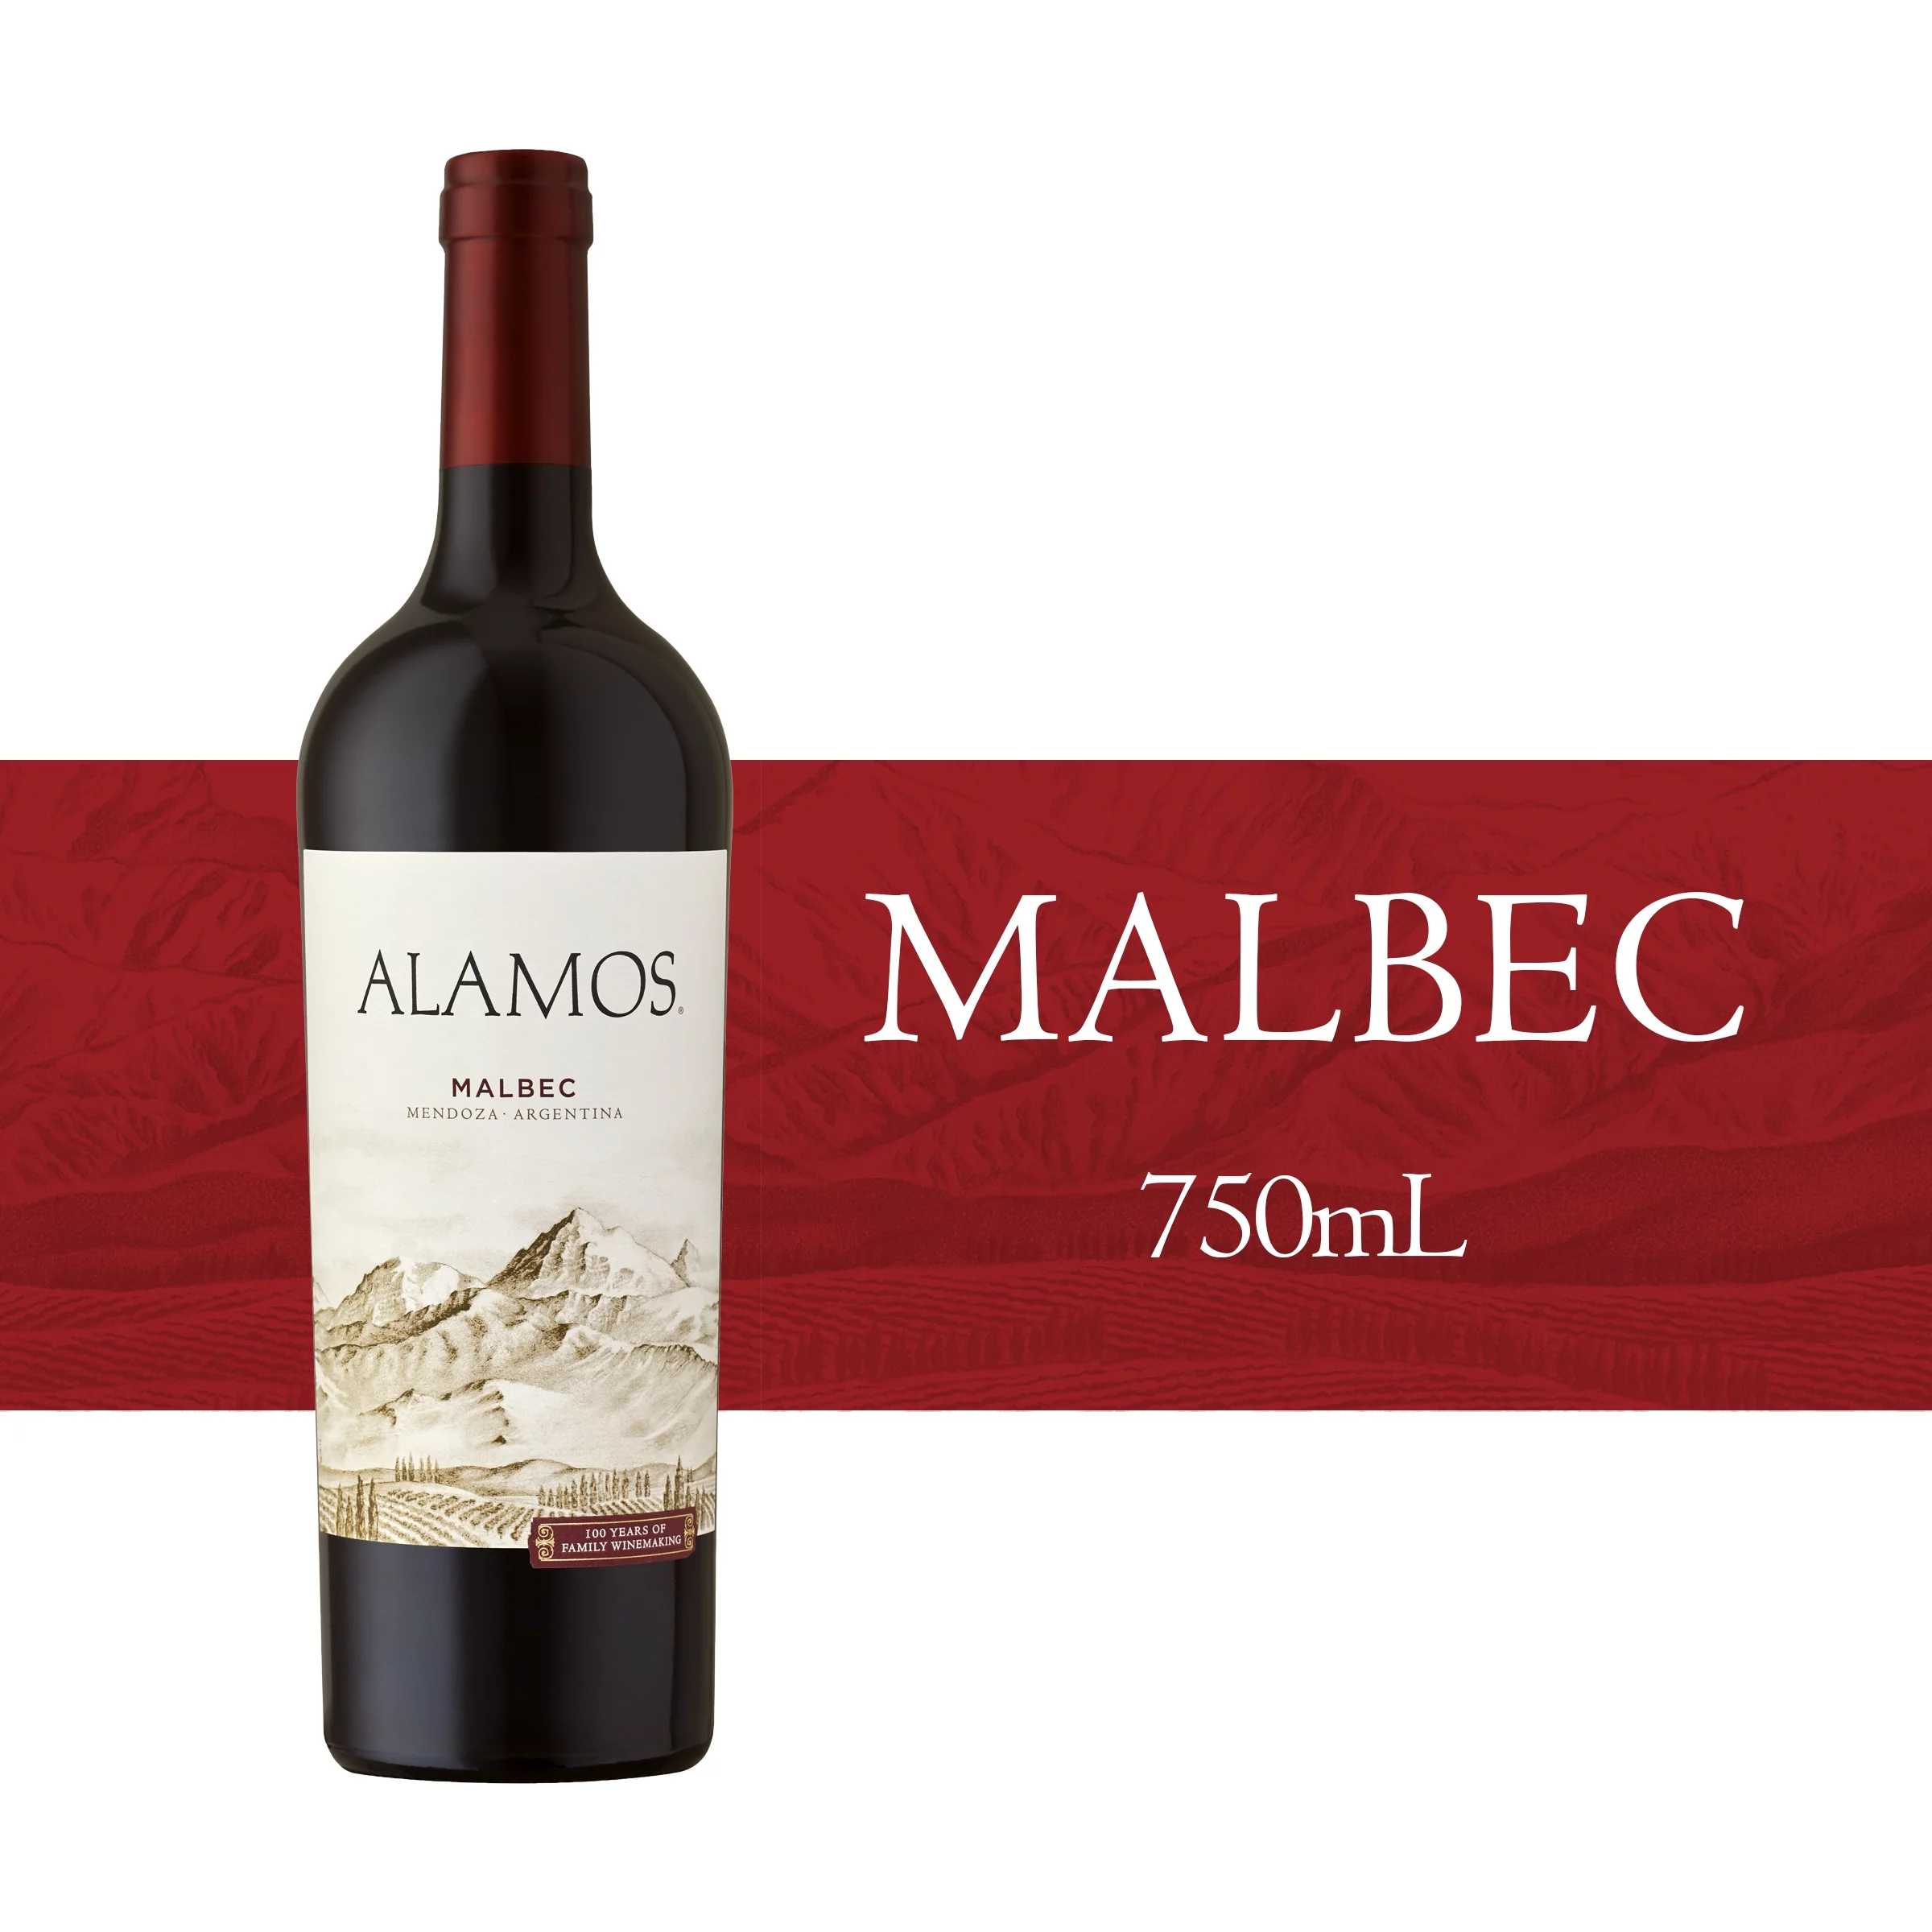 Malbec: Argentina’s Wine Ambassador to the World